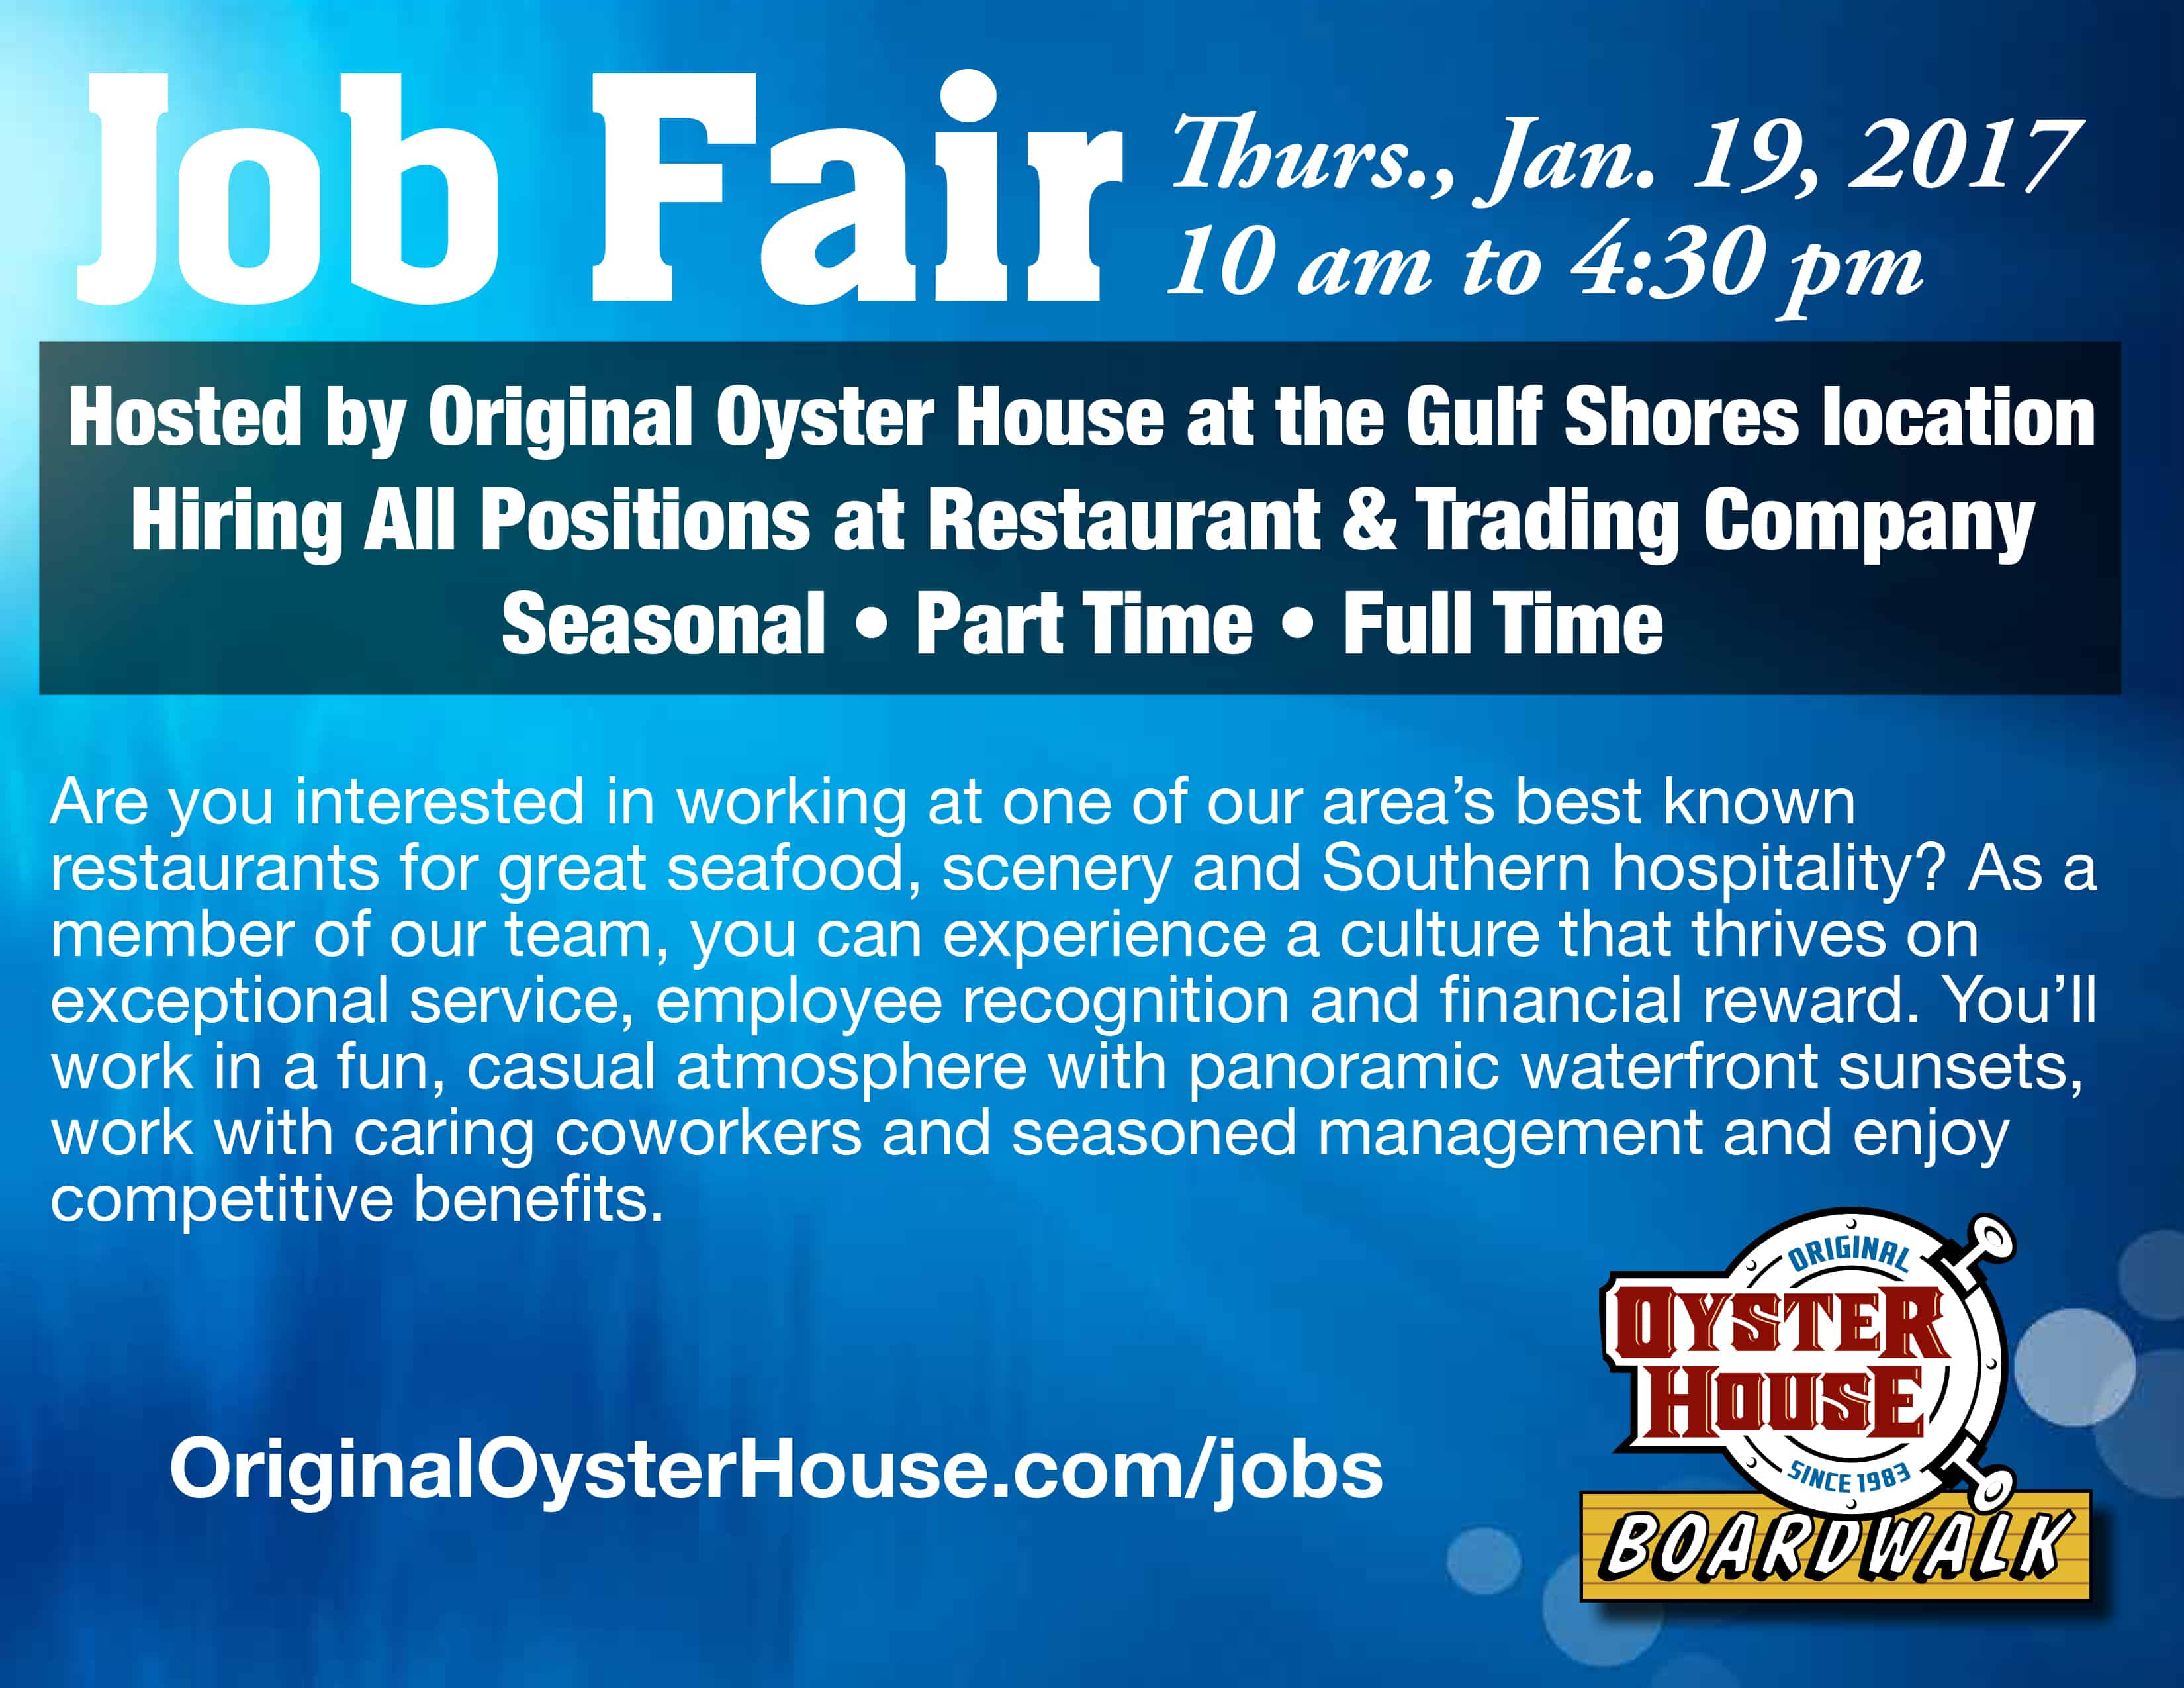 Original Oyster House Hosts Job Fair